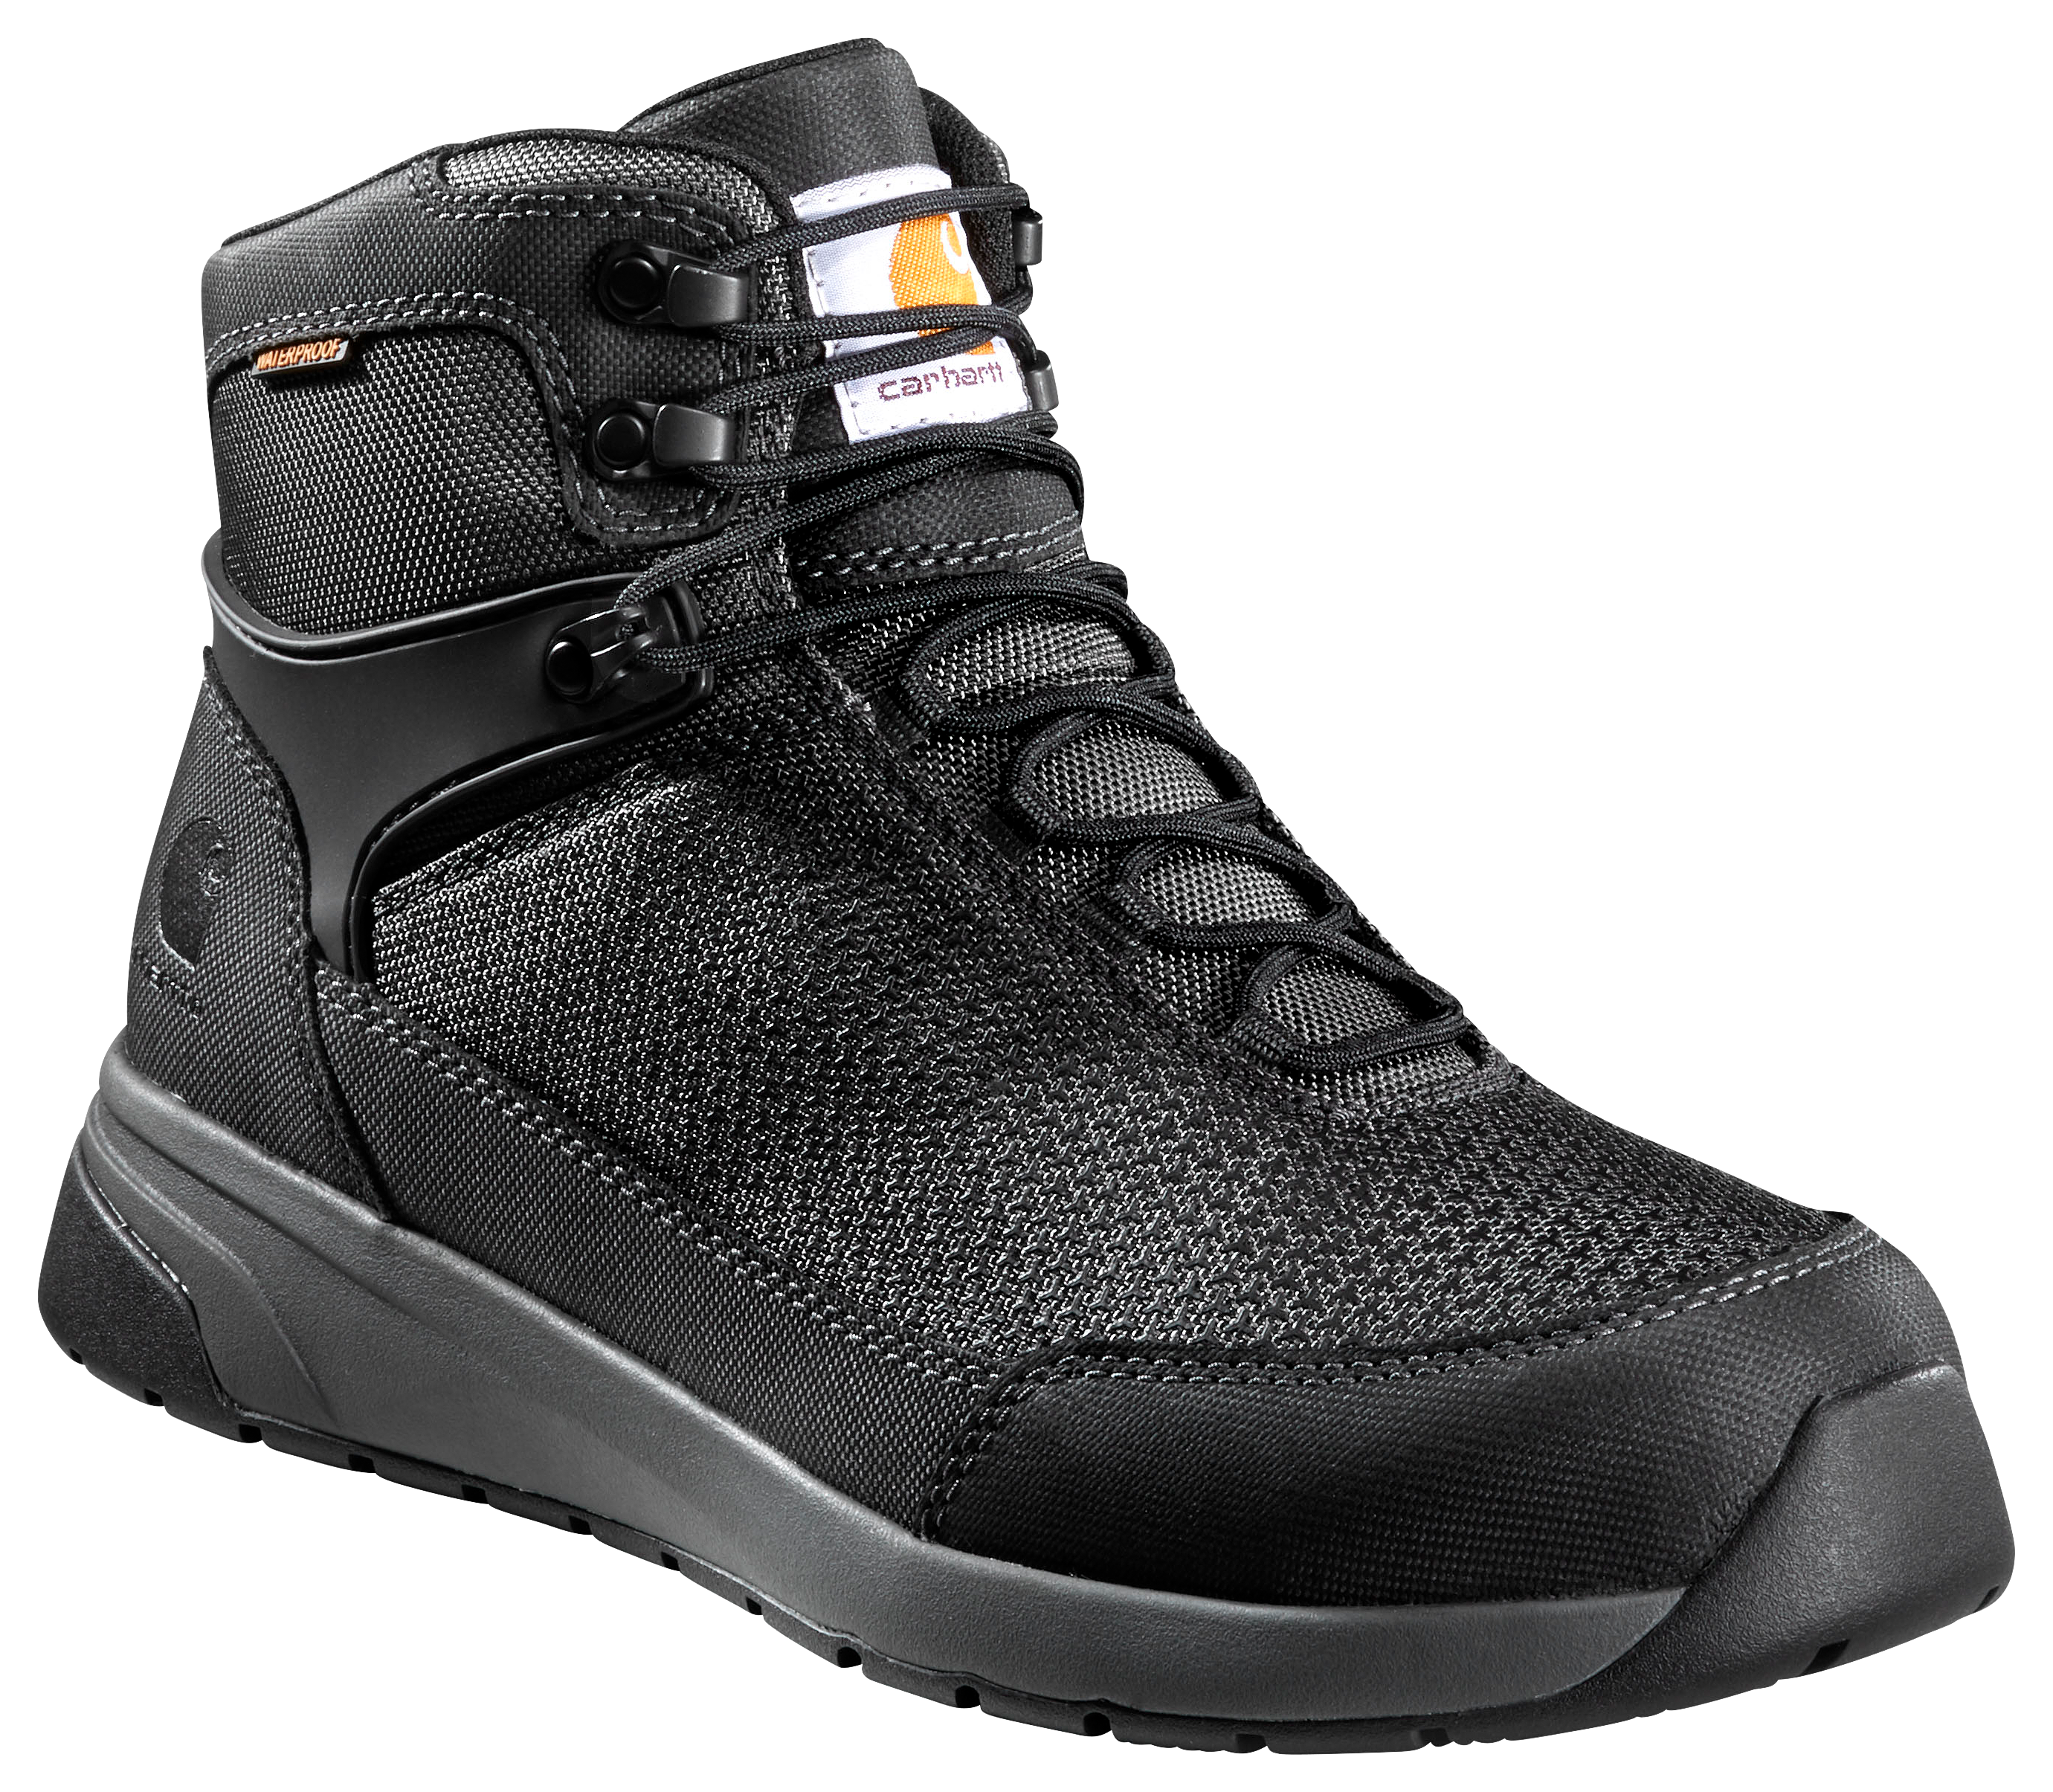 Carhartt Force 6"" Nano Composite-Toe Work Boots for Men - Black - 13M